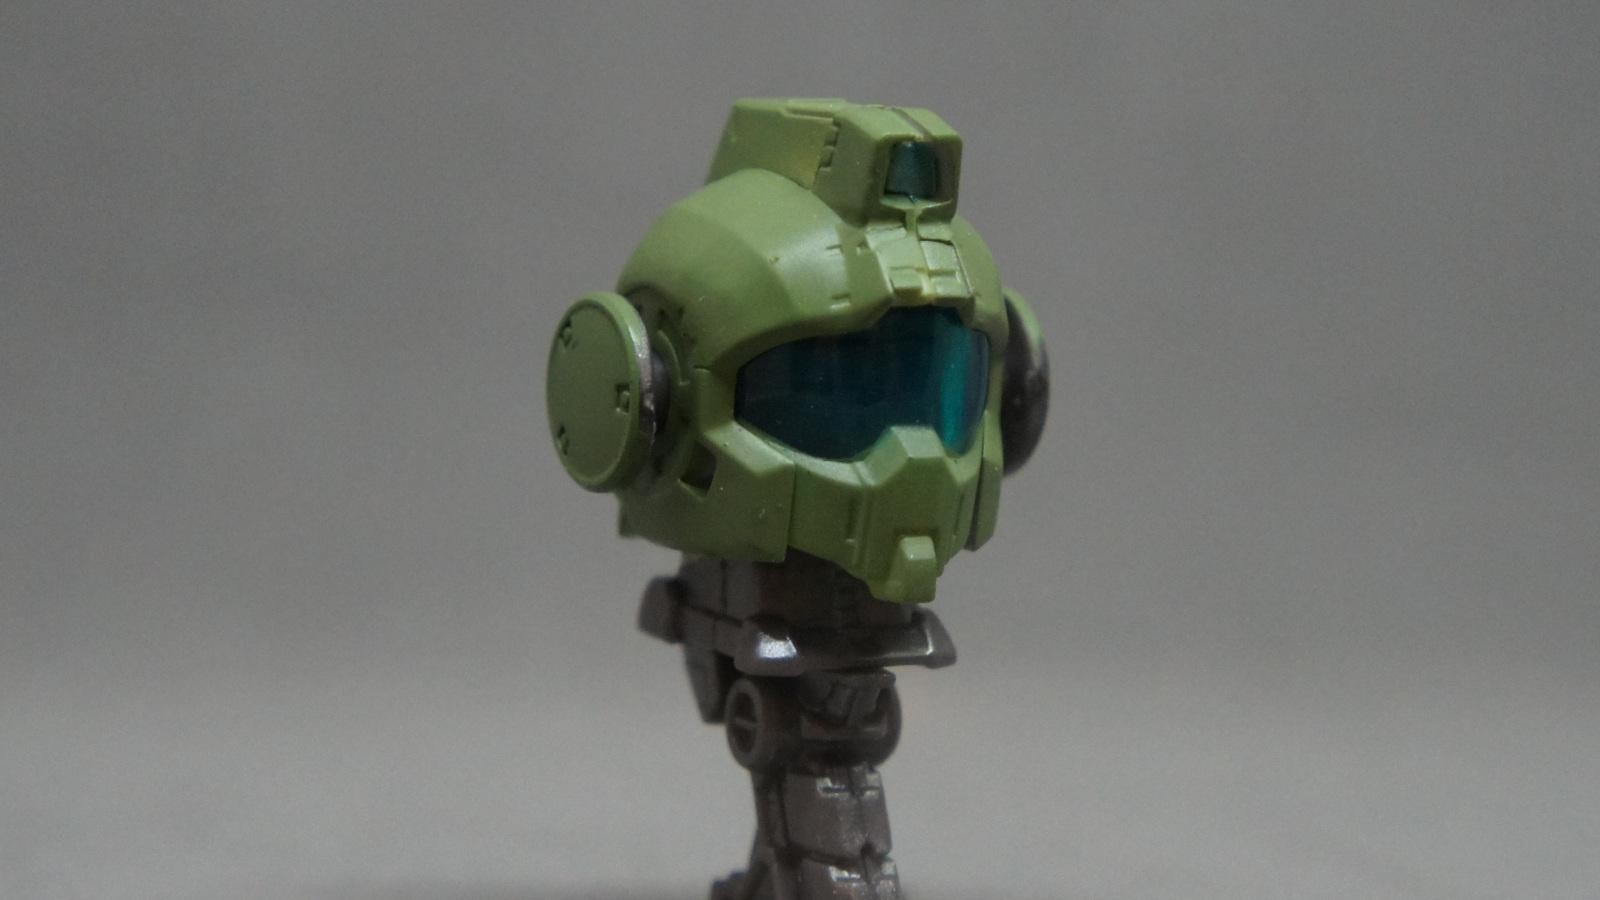 Gundam GM(G) candy toy head - Mecha robot - iModeler